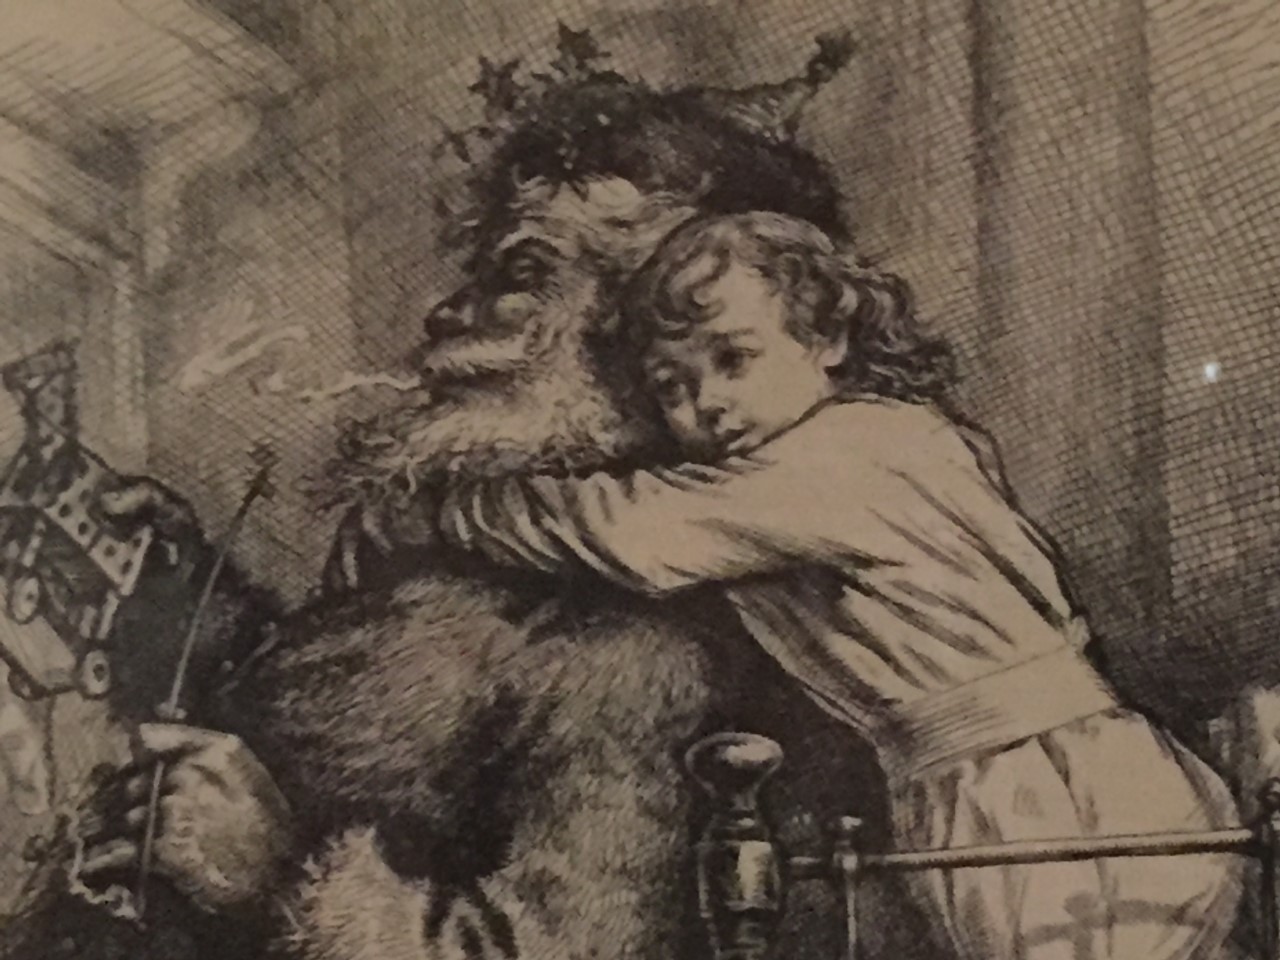 Drawing of a small child hugging Santa Claus.